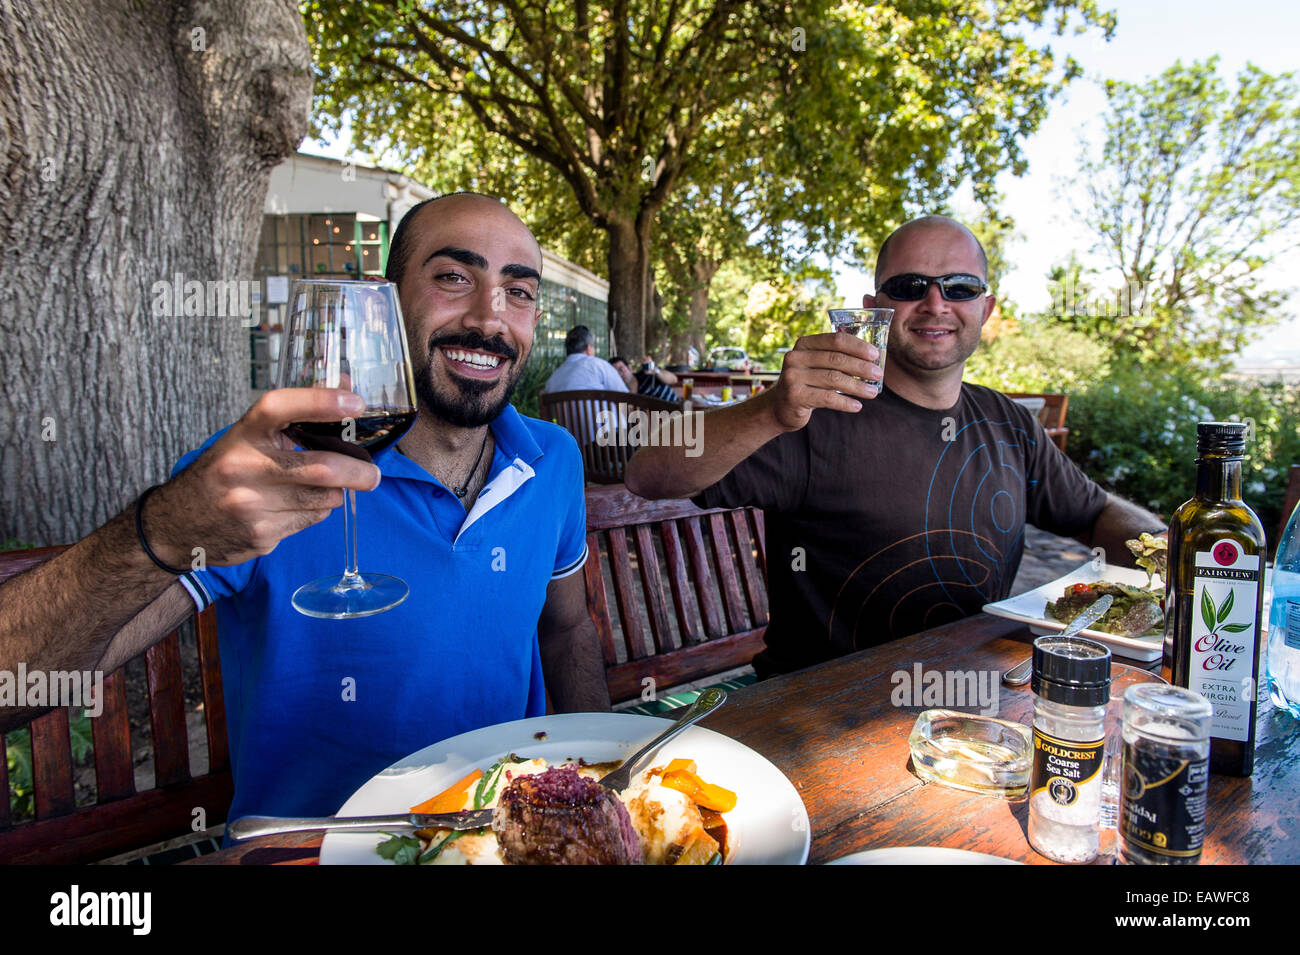 Tourists enjoy gourmet food and superb wine at a vineyard restaurant. Stock Photo